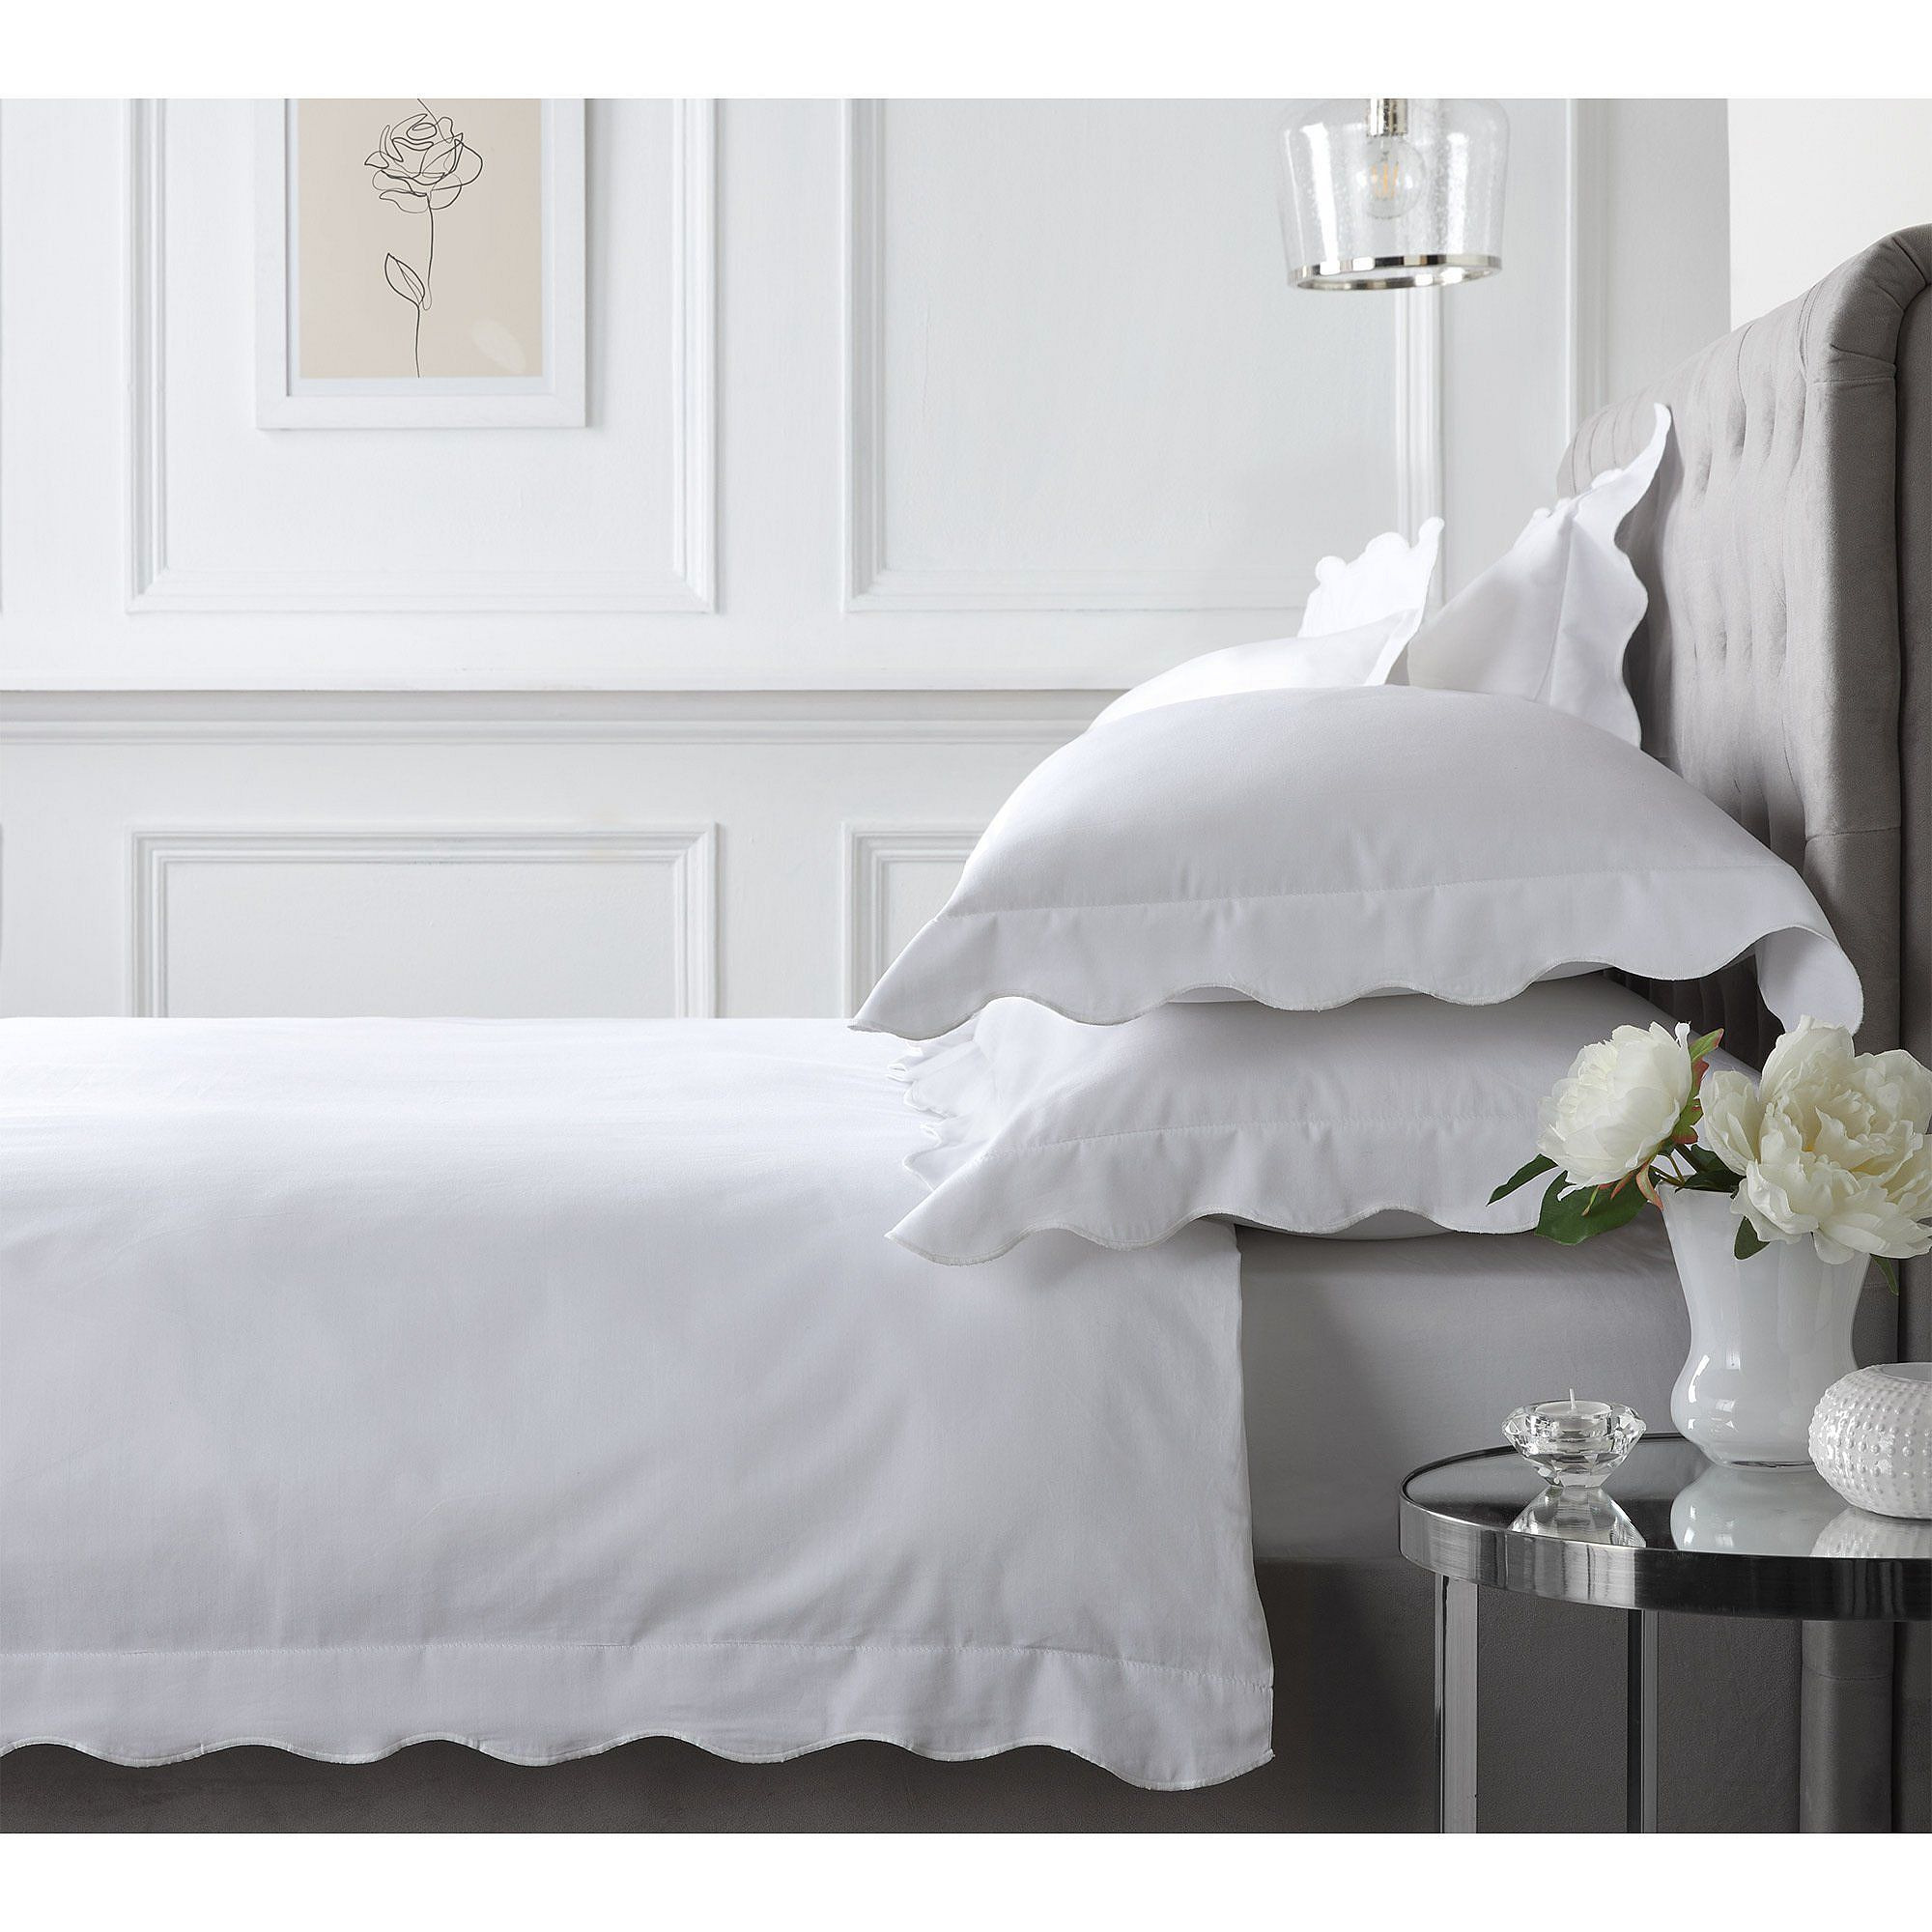 Scalloped White Bed Linen Set (King Set) - image 1